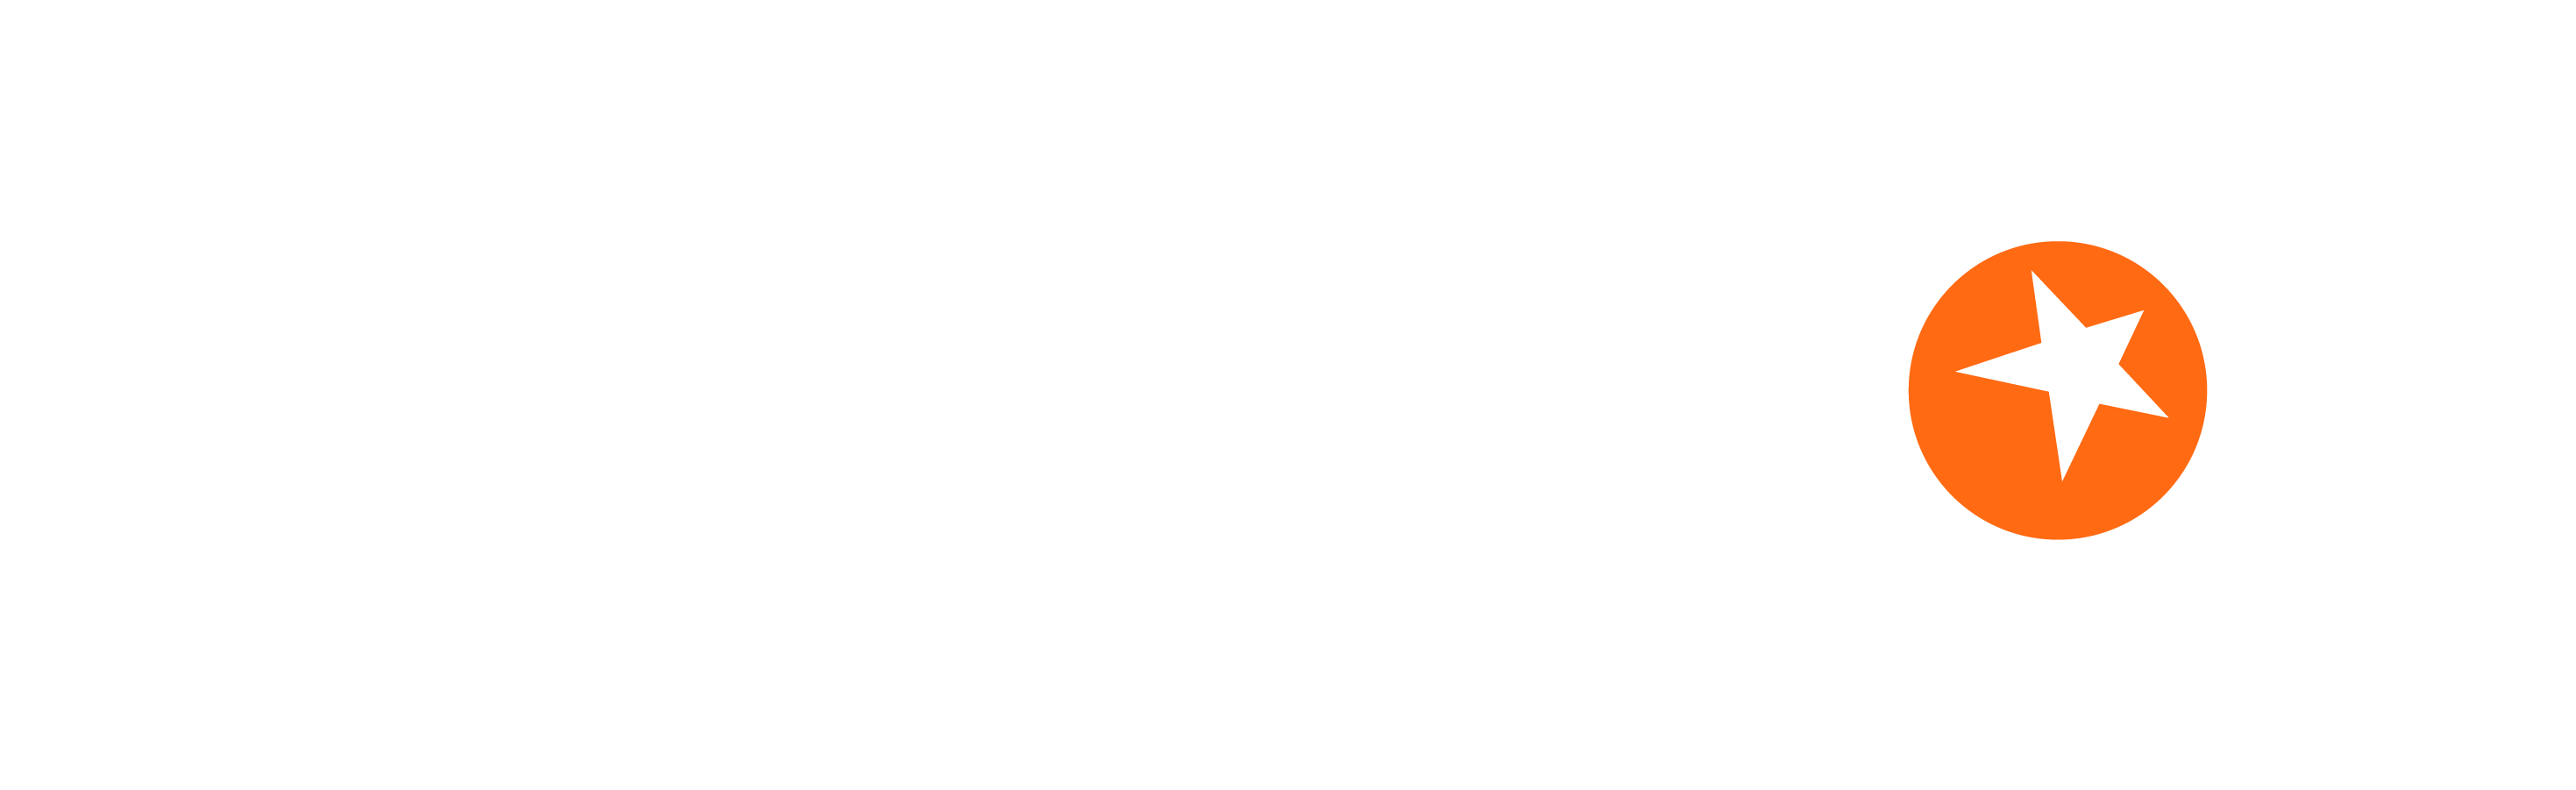 Causeway_logo_white